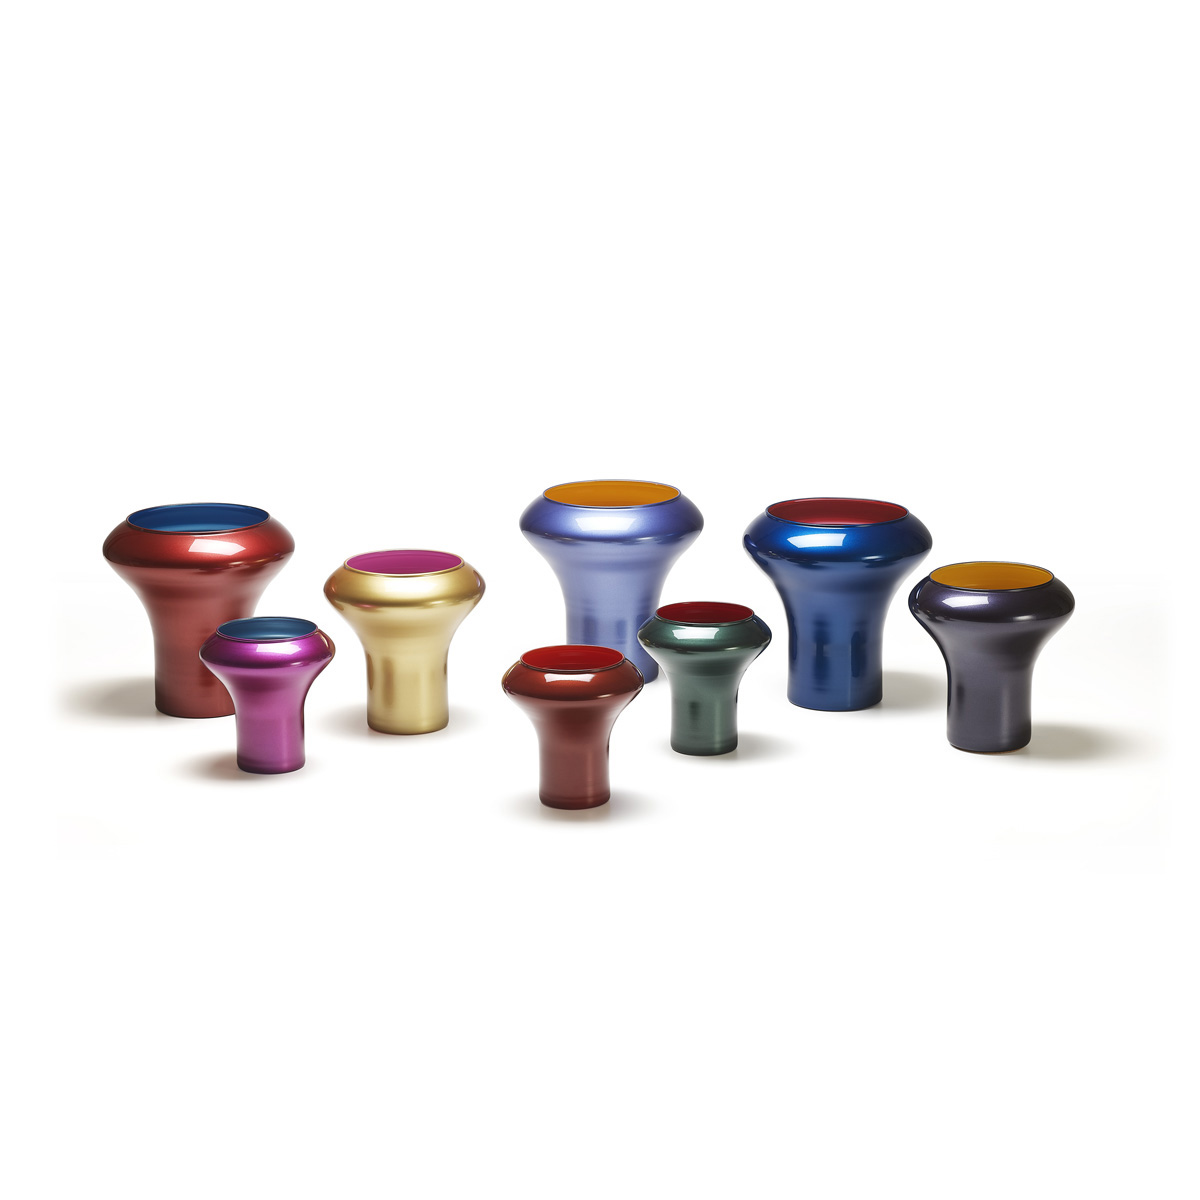 8 Ragaz vases in different colors